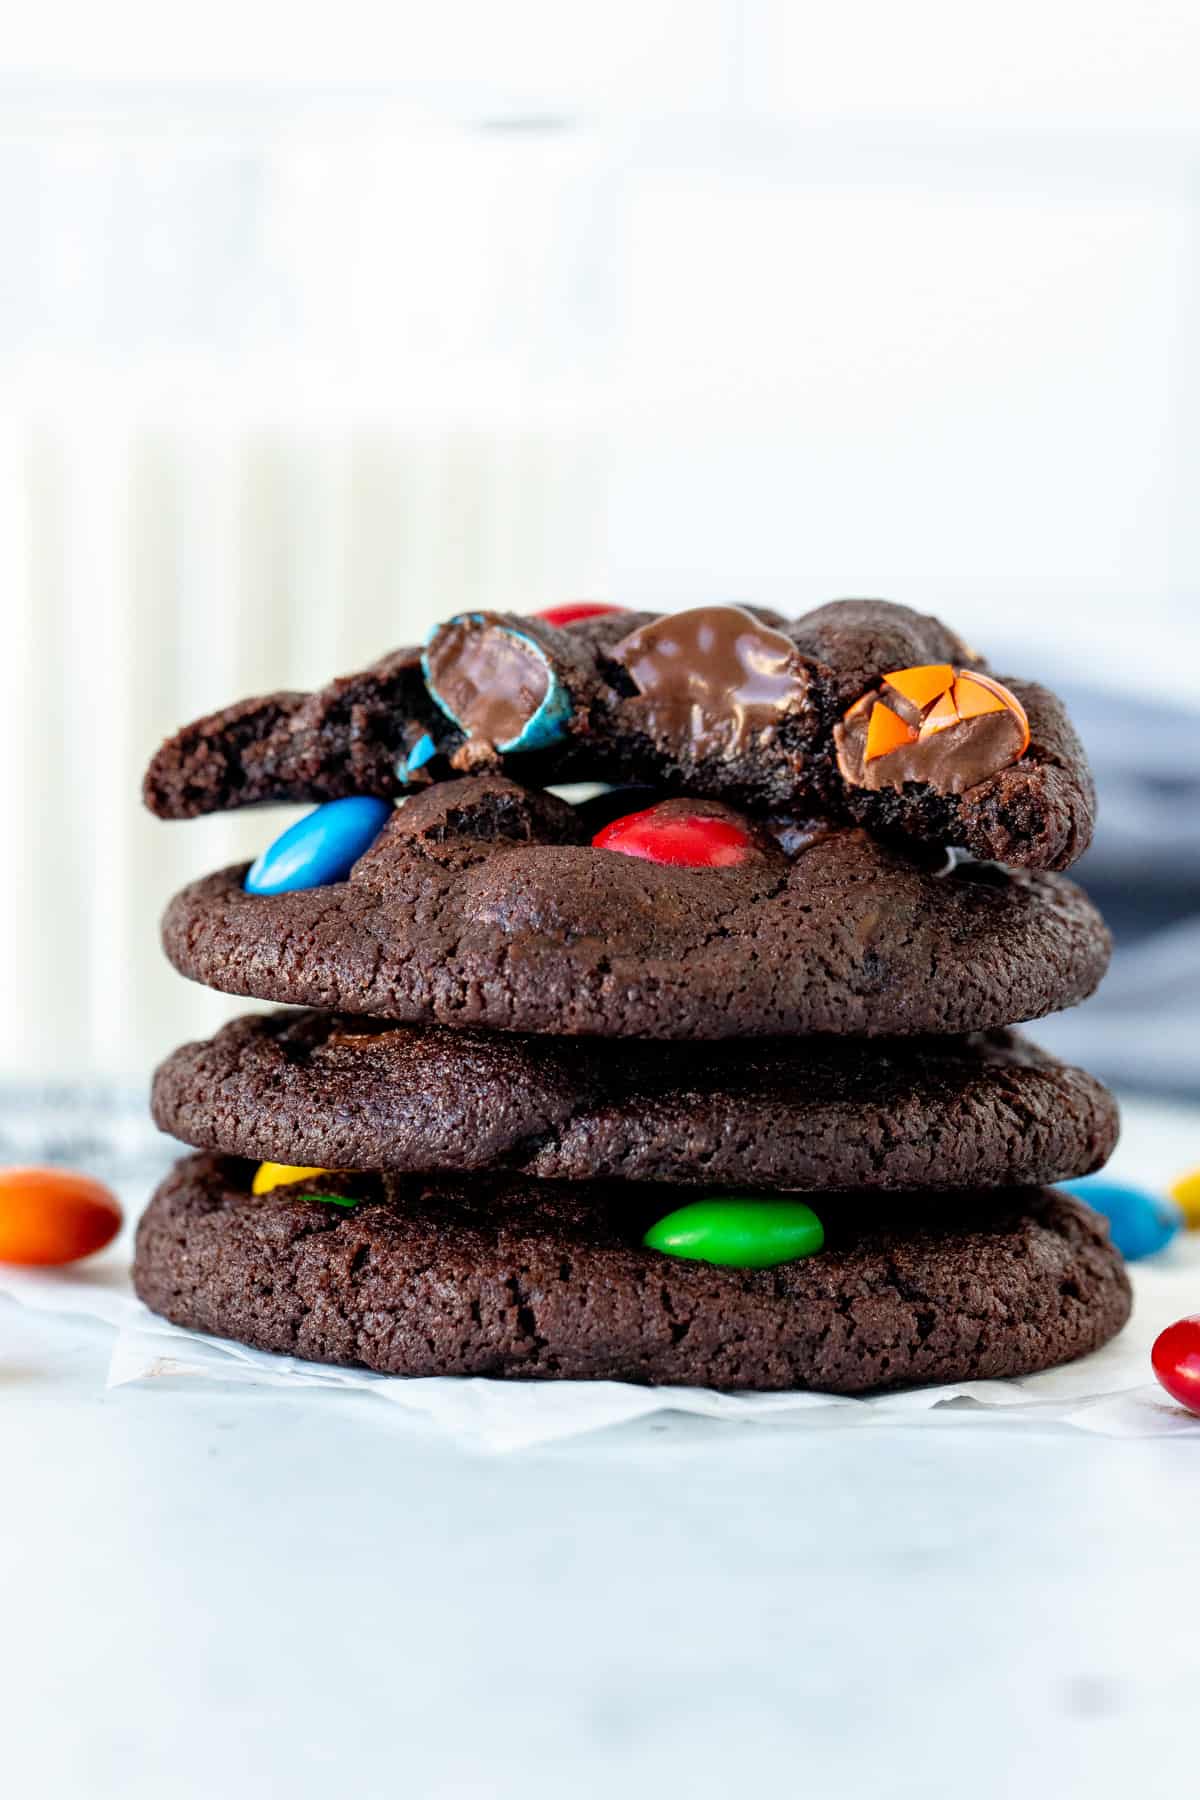 Stack of chocolate M&M cookies with top cookie broken in half